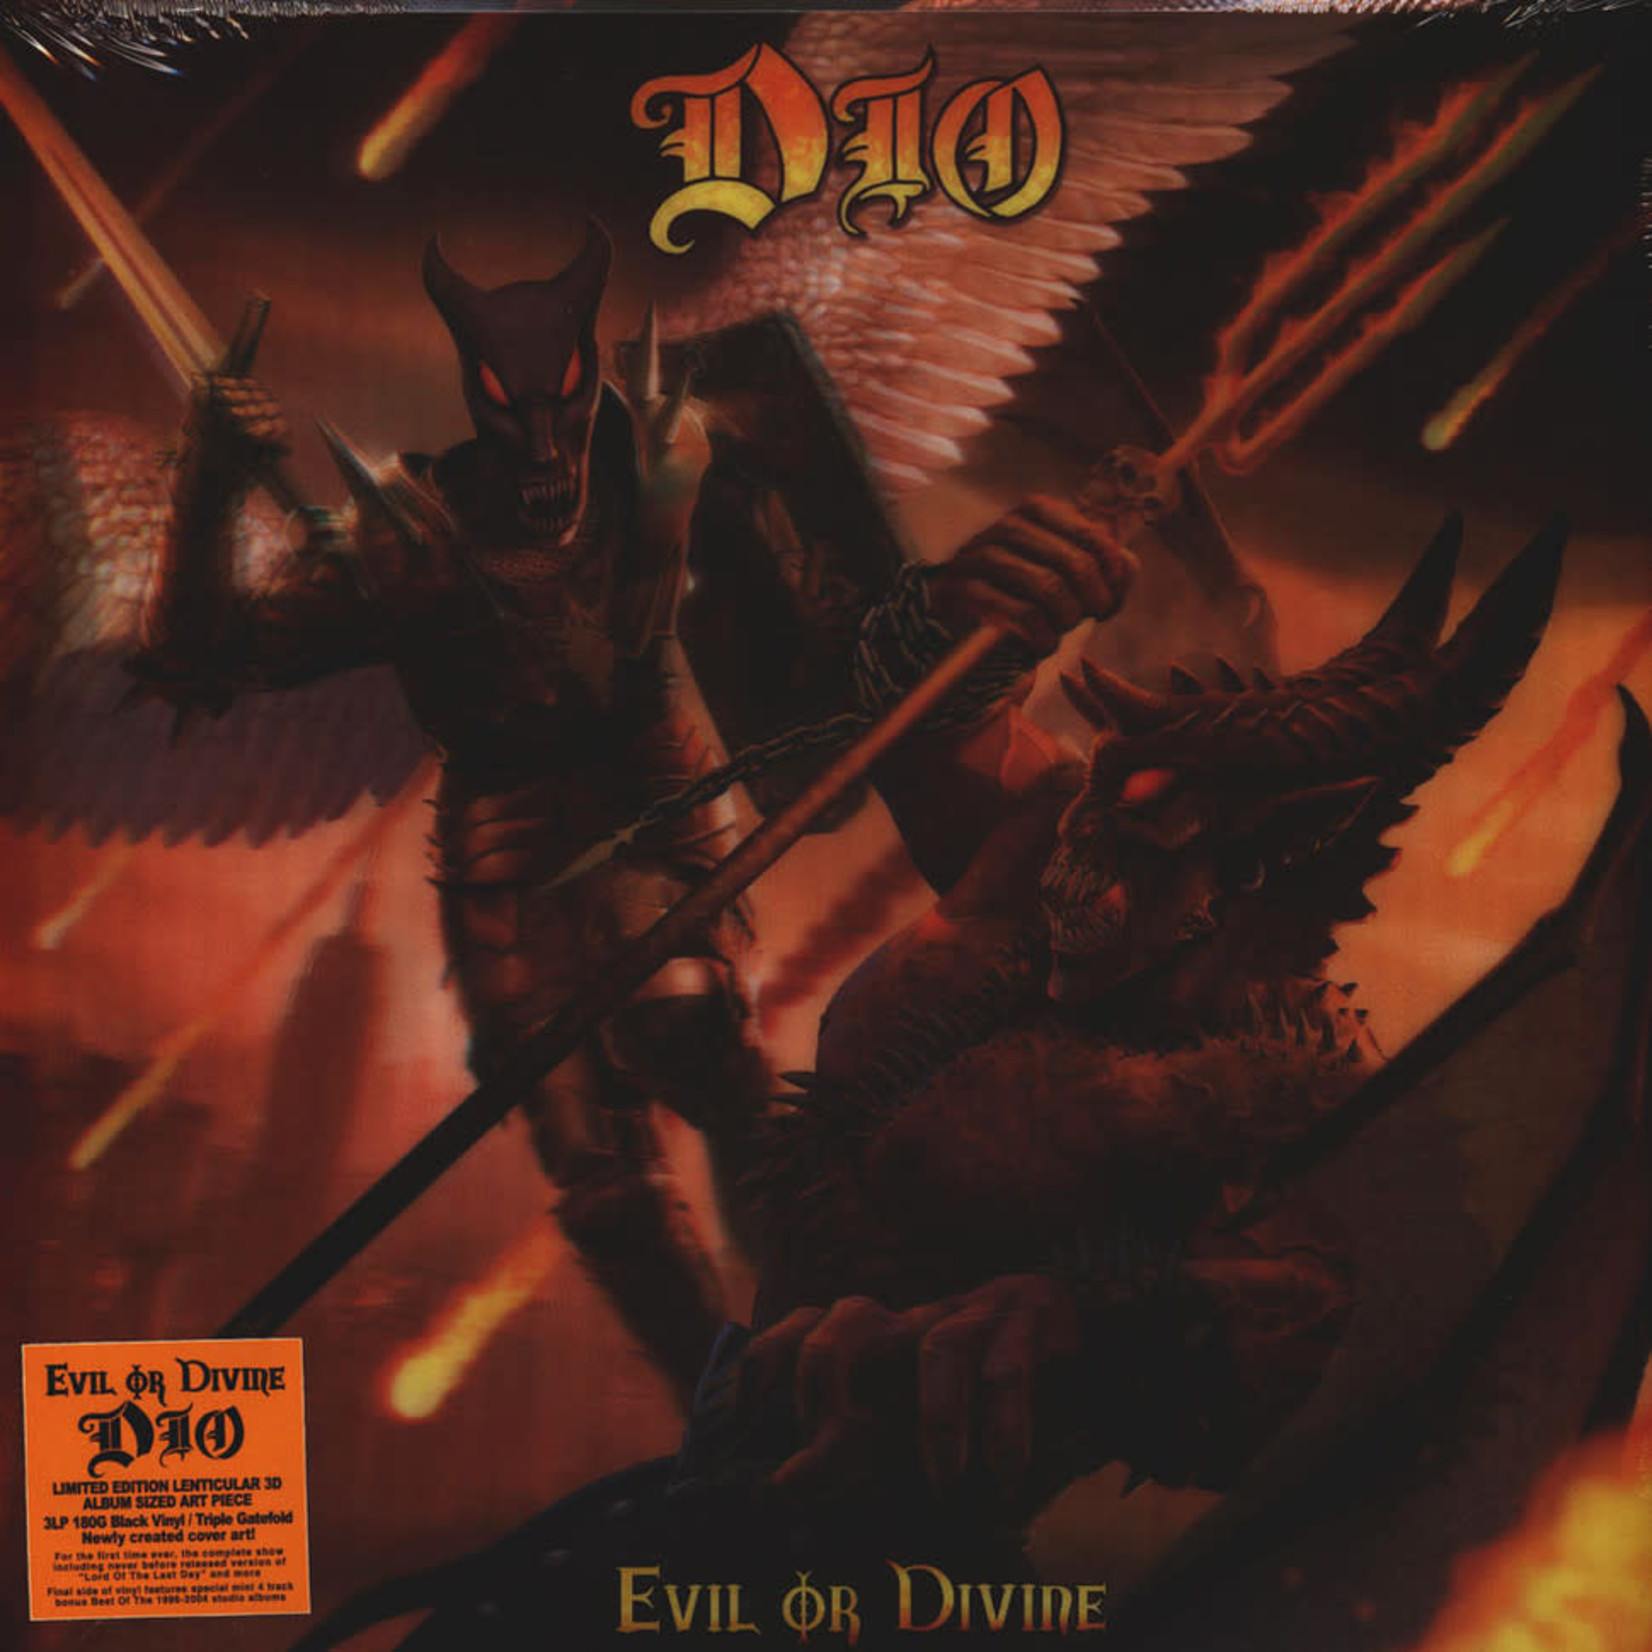 [New] Dio (Black Sabbath) - Evil Or Divine: Live In New York City (3LP)